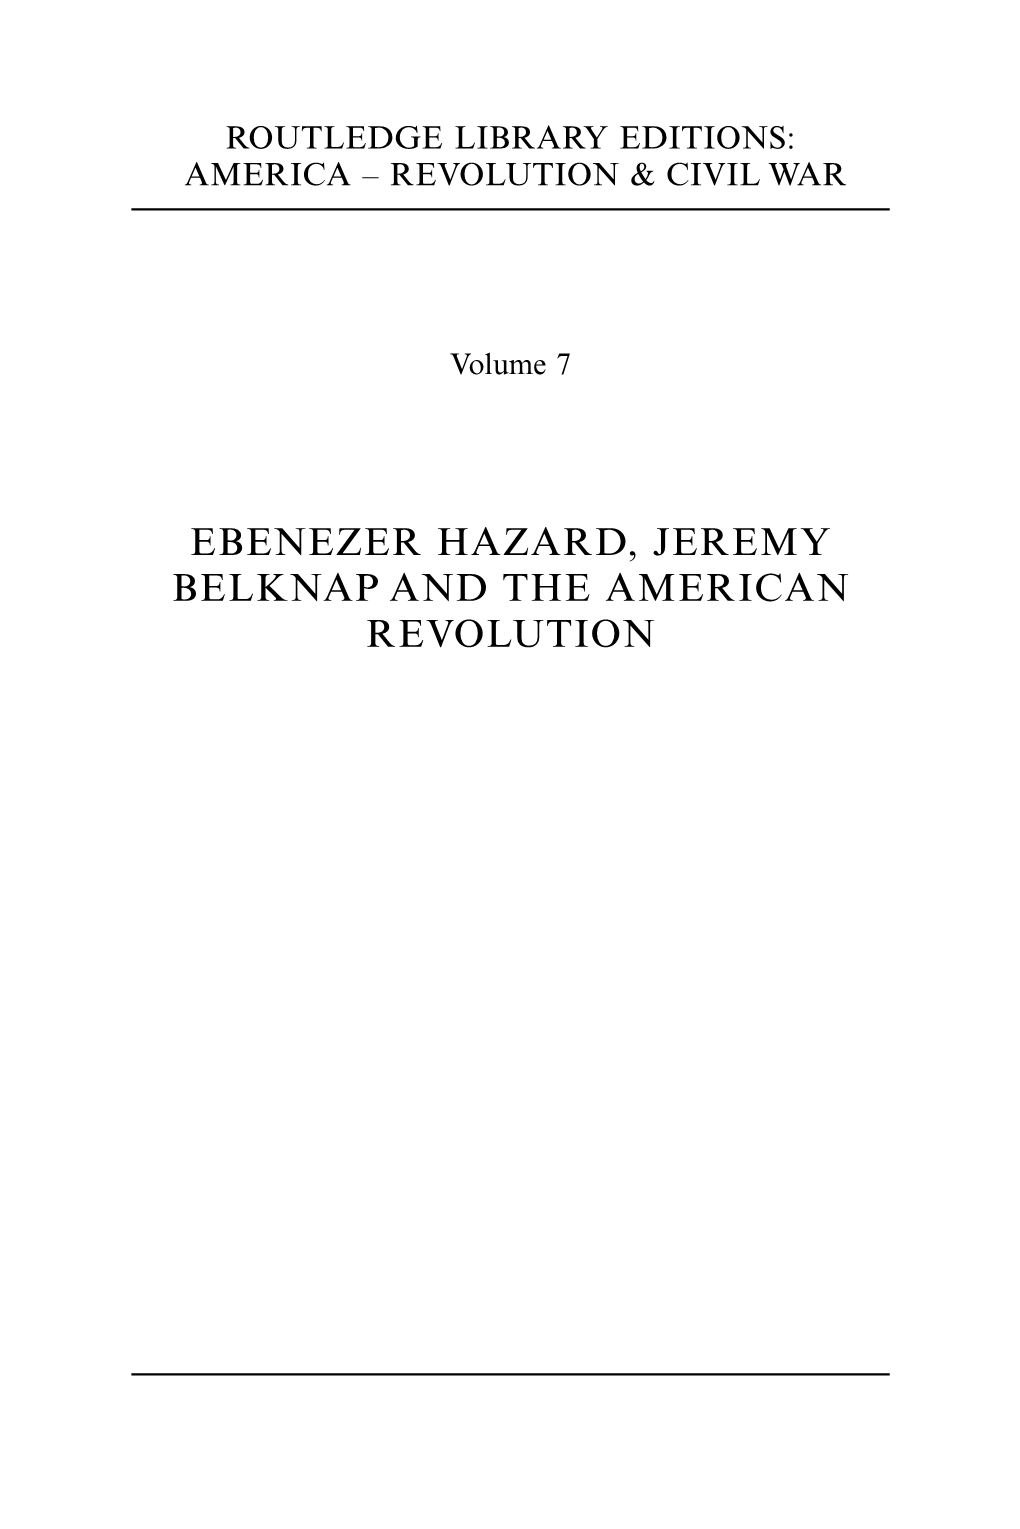 Ebenezer Hazard, Jeremy Belknap and the American Revolution